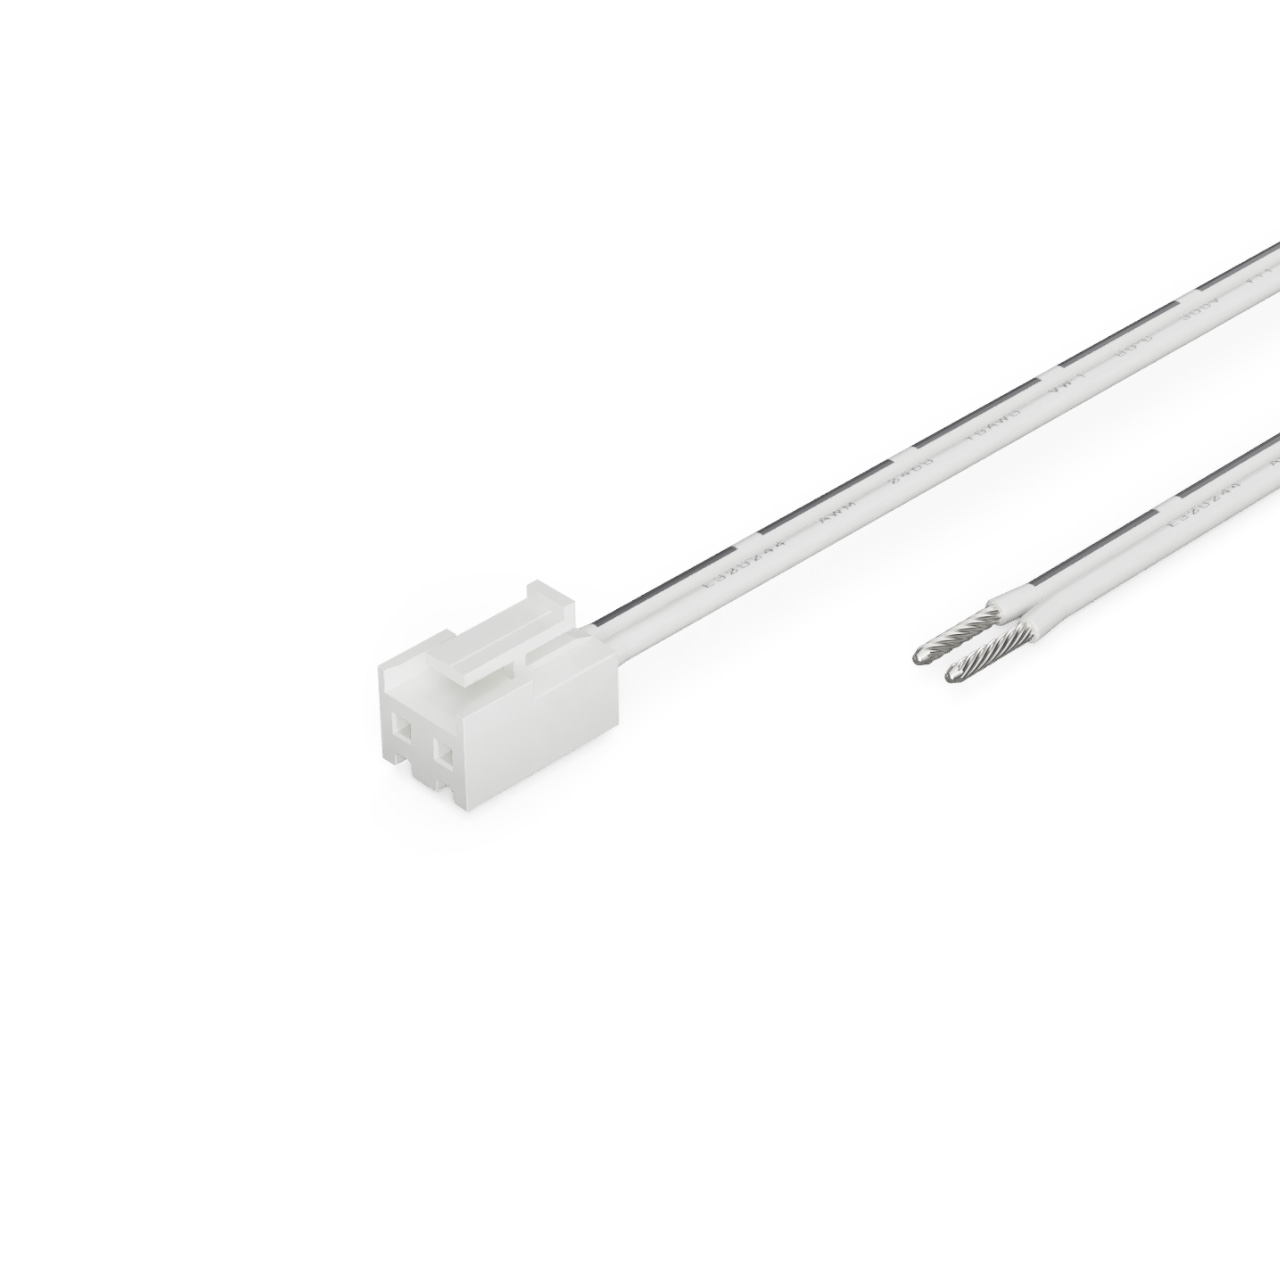 12V Syndeo Plug and Play 60 LEDs 4.8w p/m LED Strip Light, IP65 (5m Reel)